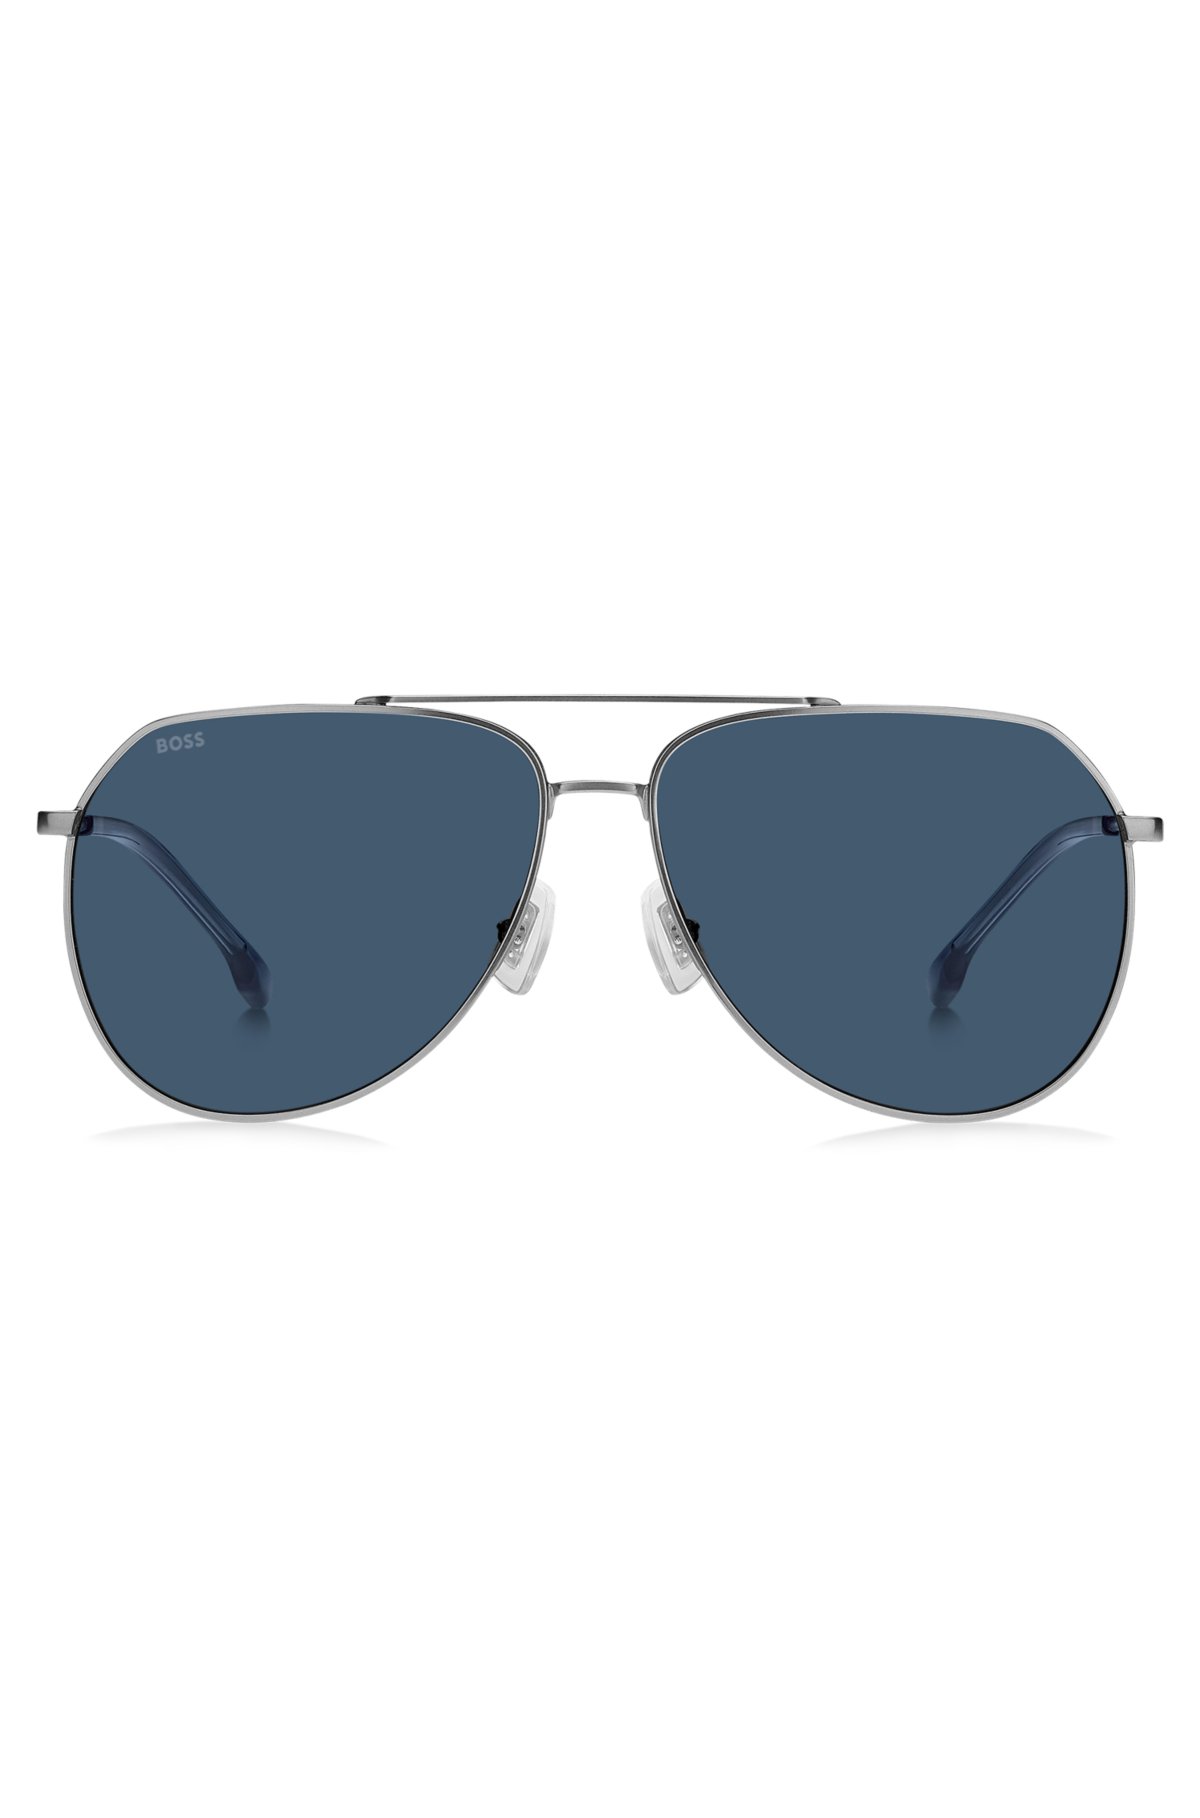 BOSS - Double-bridge sunglasses with beta-titanium temples